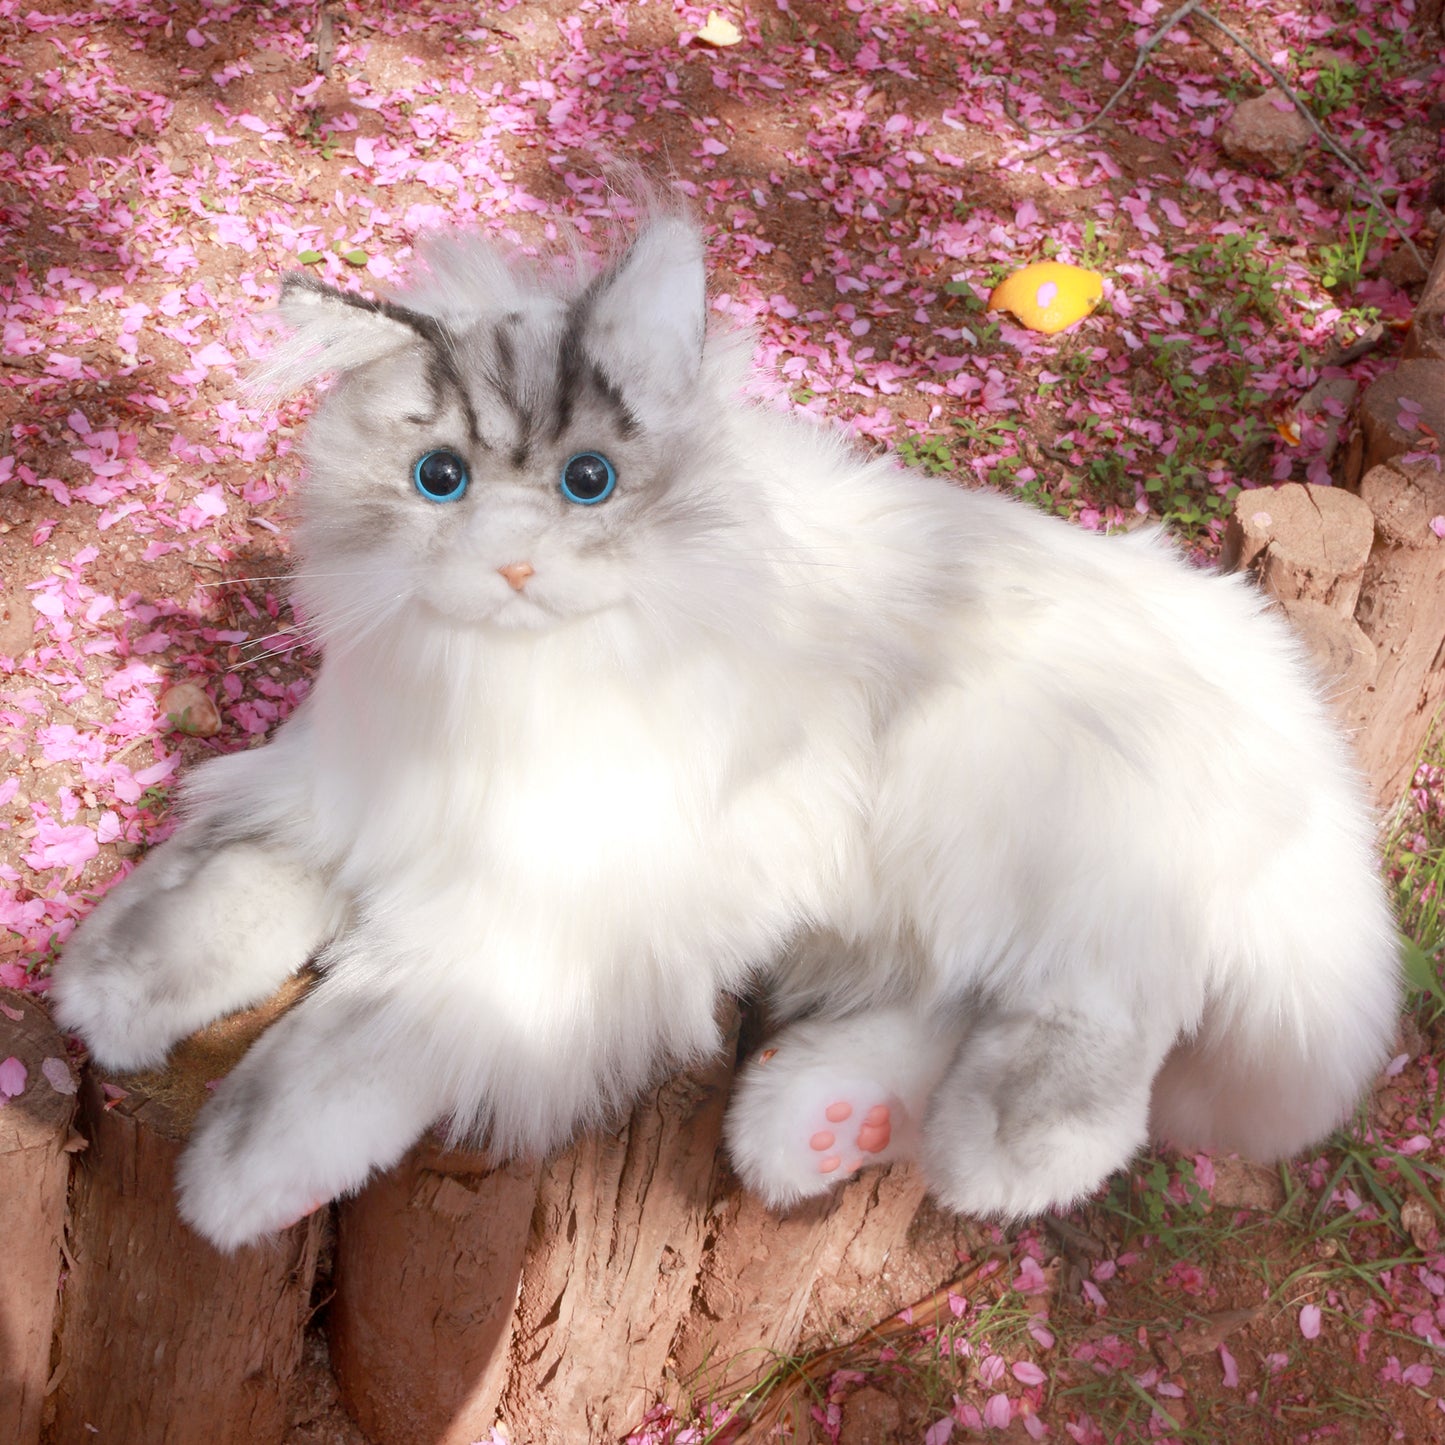 Tracy Chongker Handmade 3LB Weighted Plush Cat for hug